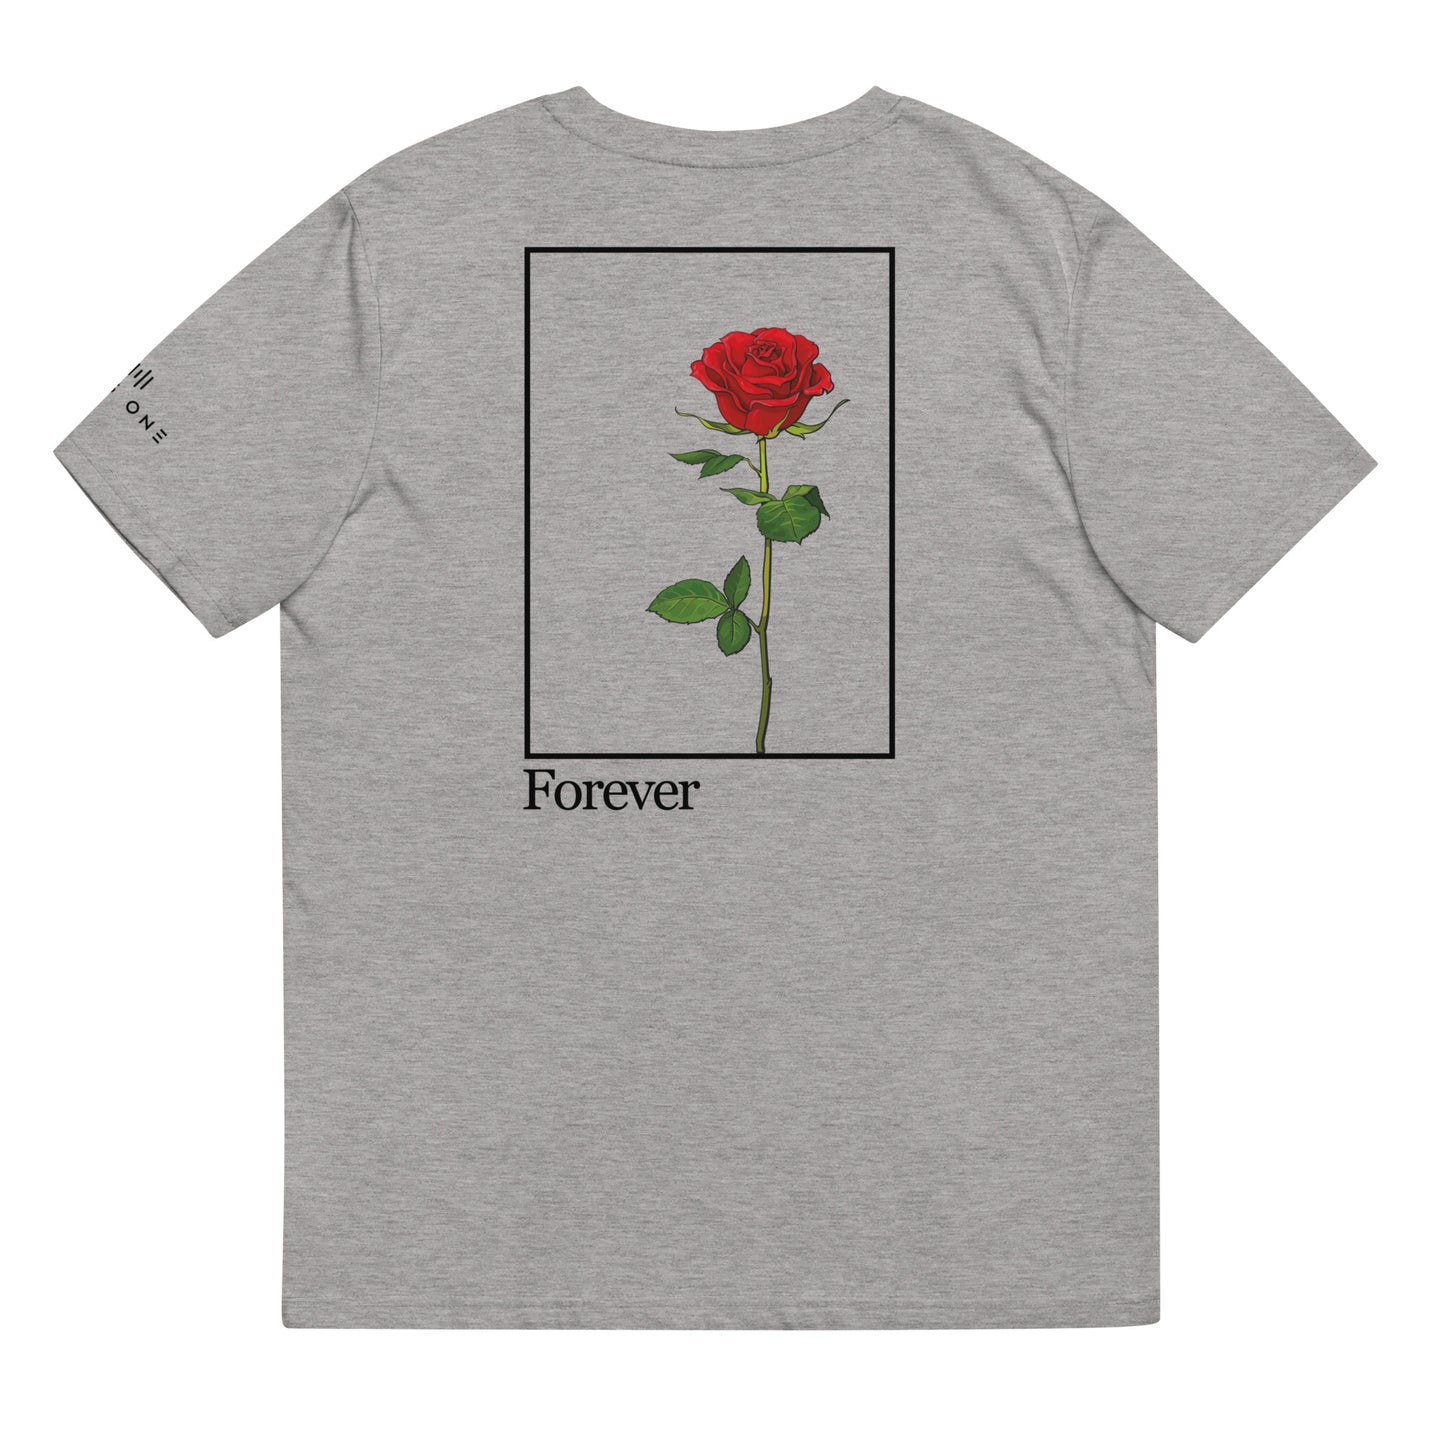 Ltd (Forever v1) Unisex organic cotton t-shirt (Black Text)